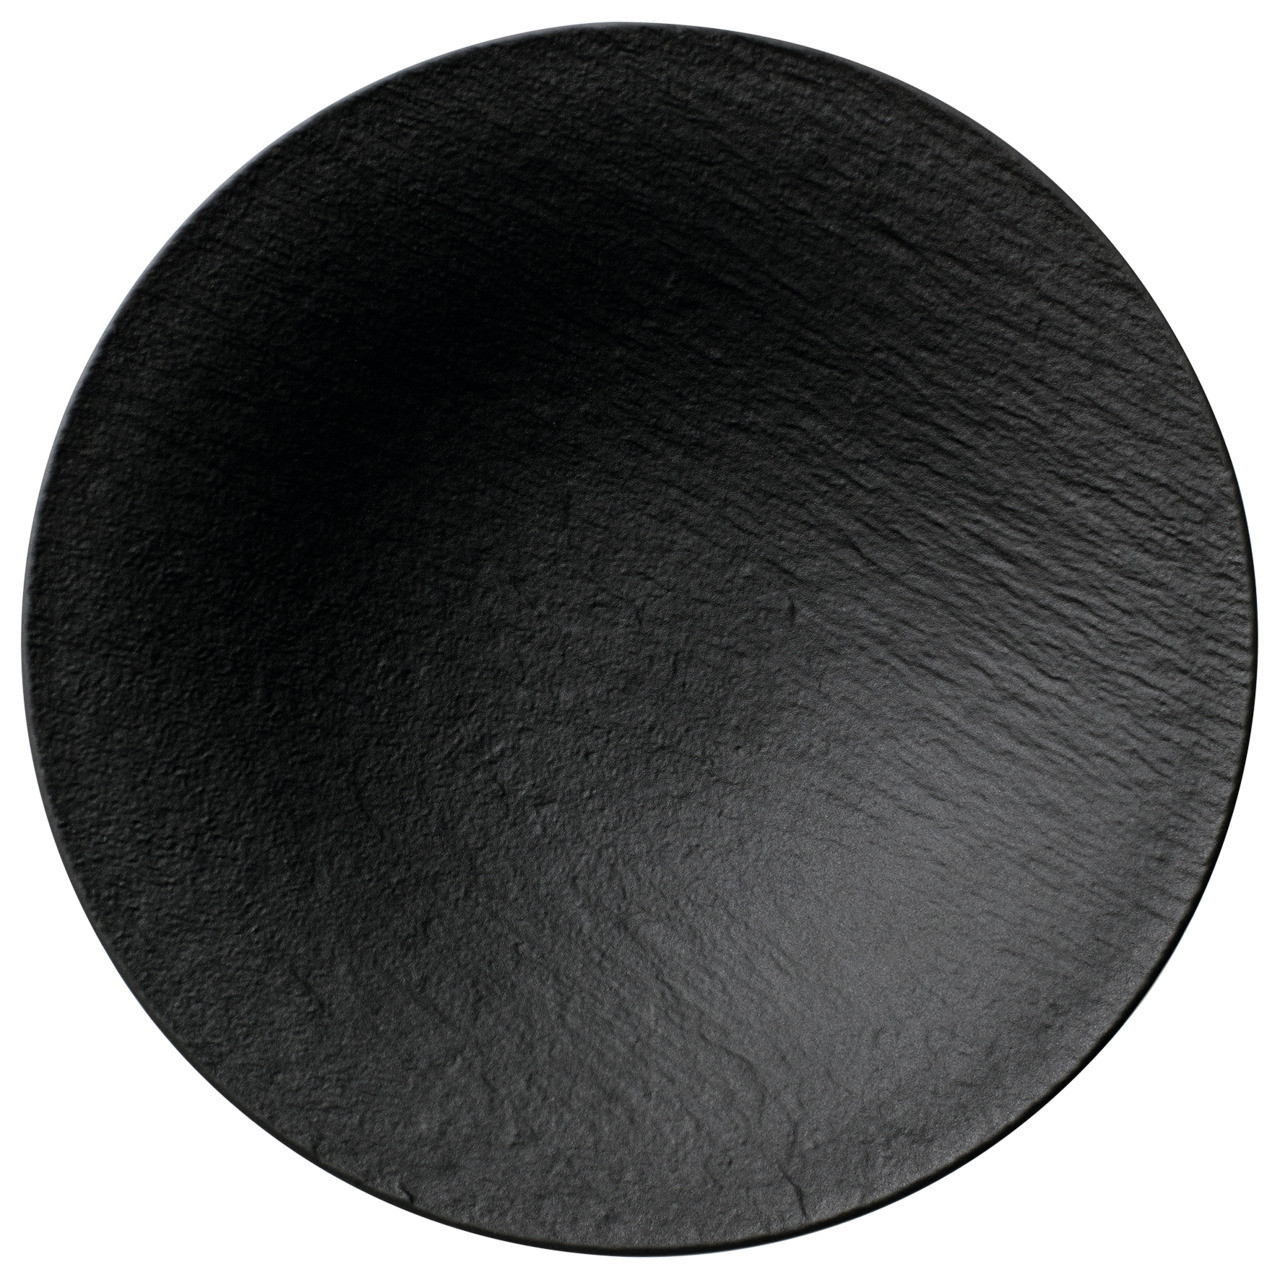 The Rock Black Shale, Coupeteller tief ø 290 mm / 0,44 l schwarz